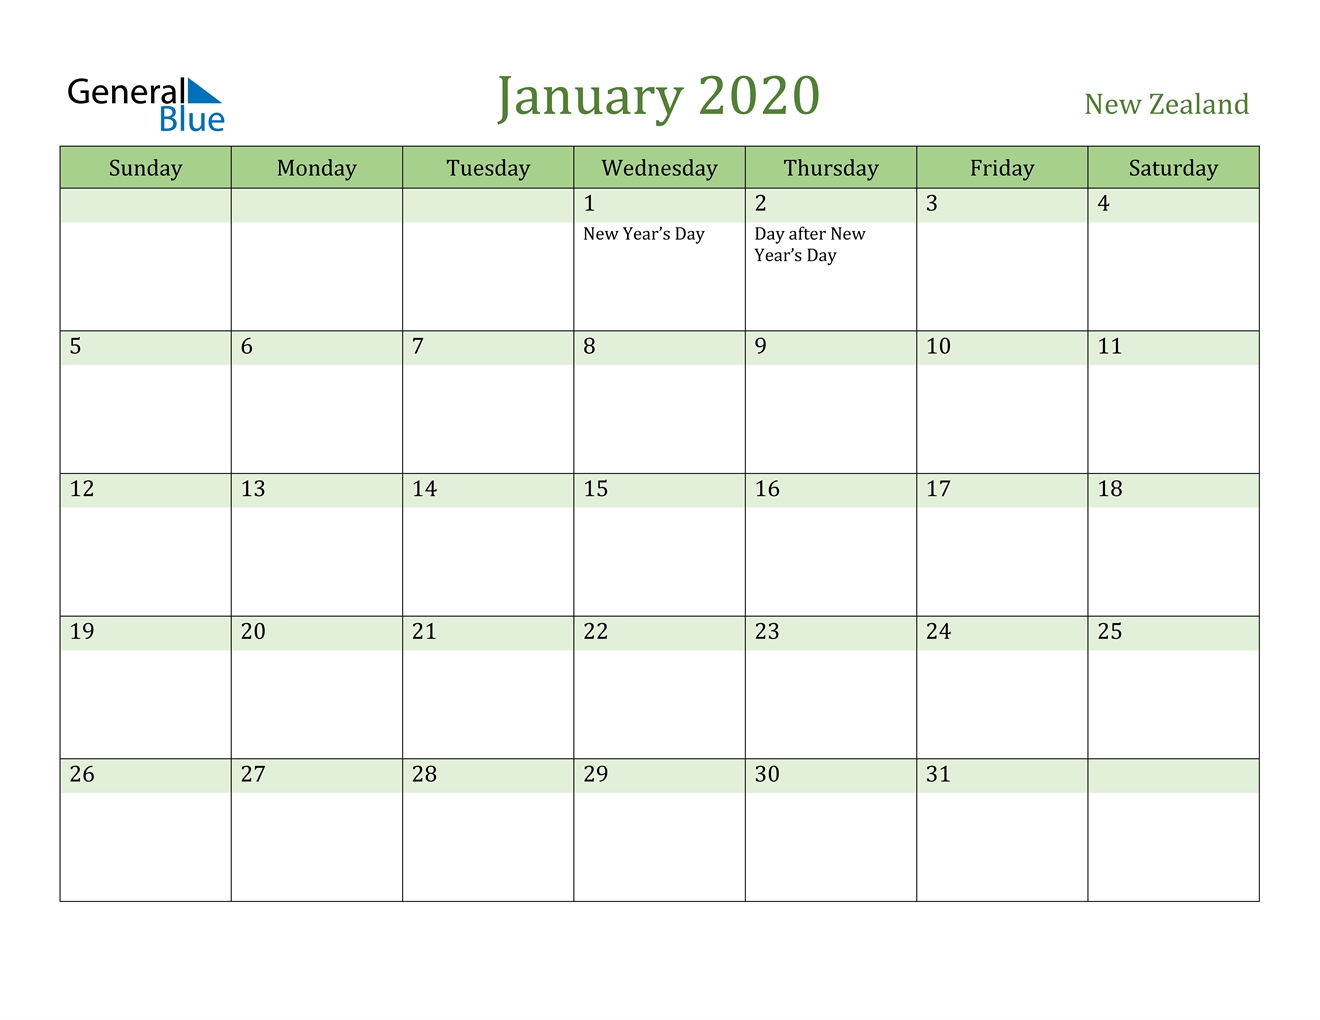 January 2020 Calendar New Zealand - Cerno.mioduchowski